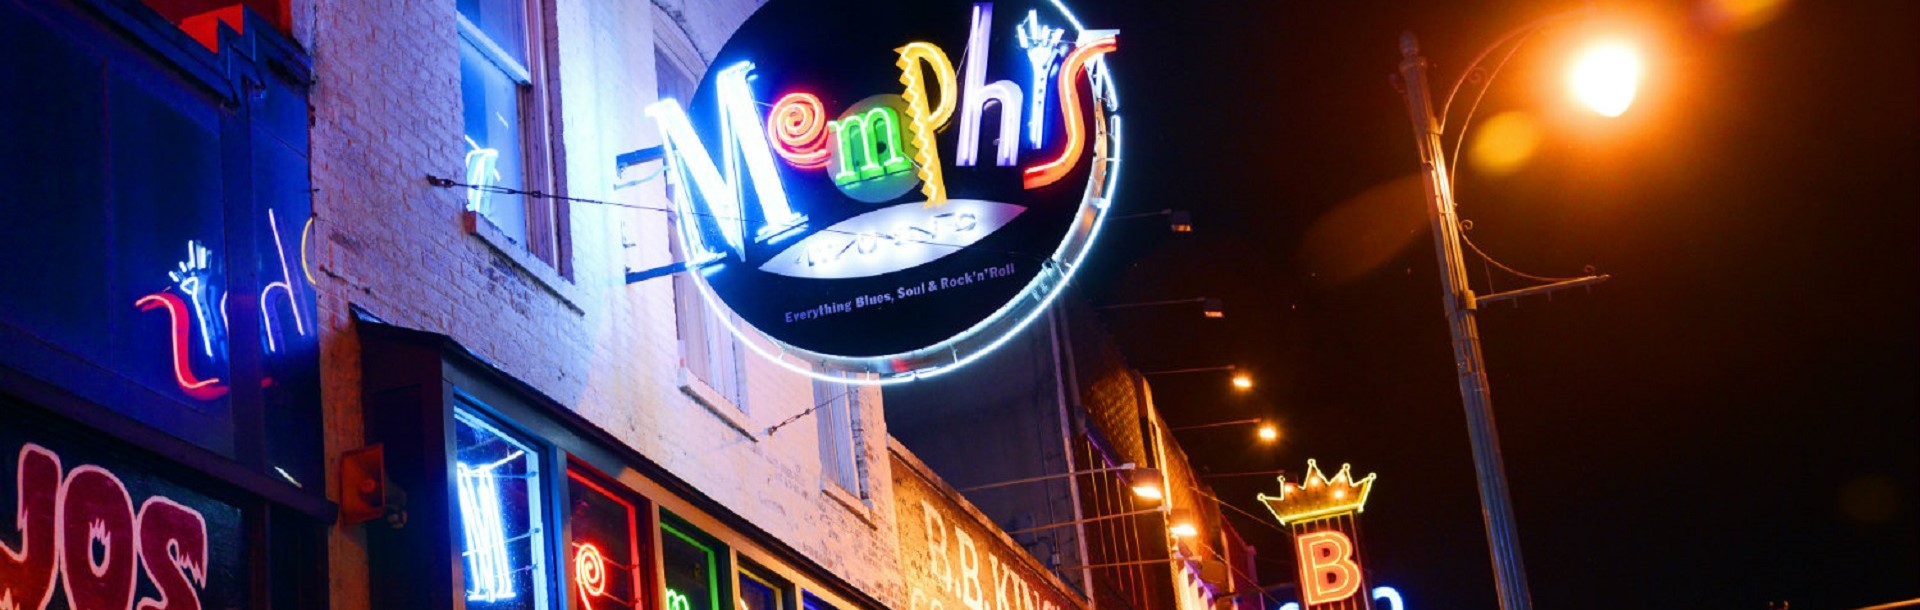 Memphis - Tennessee